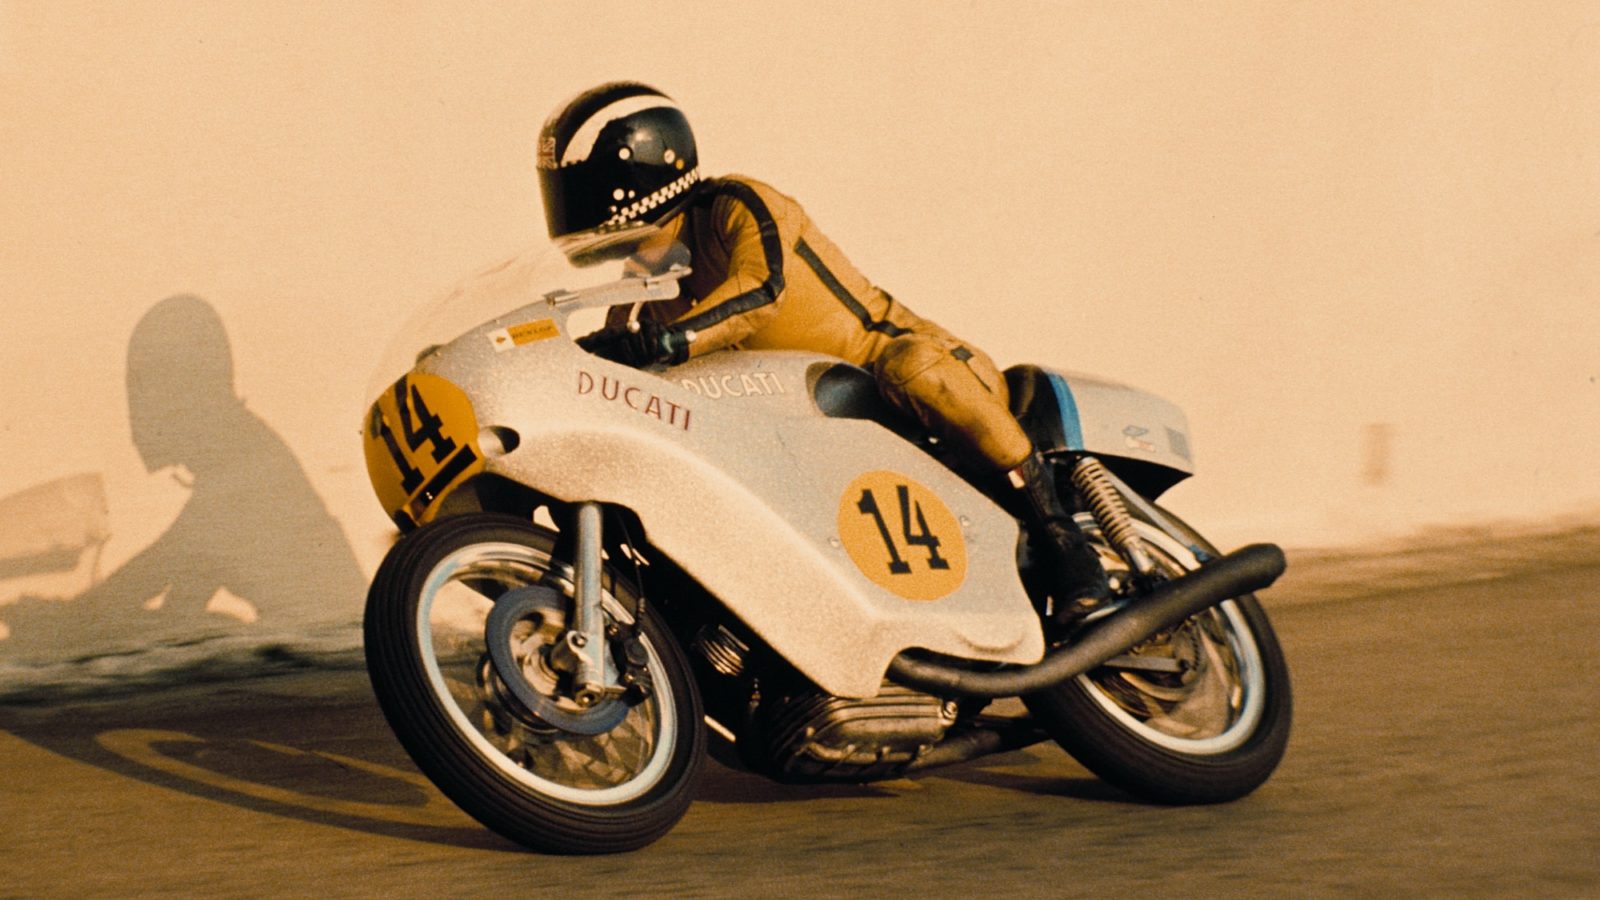 Phil Read, 1971 Ducati